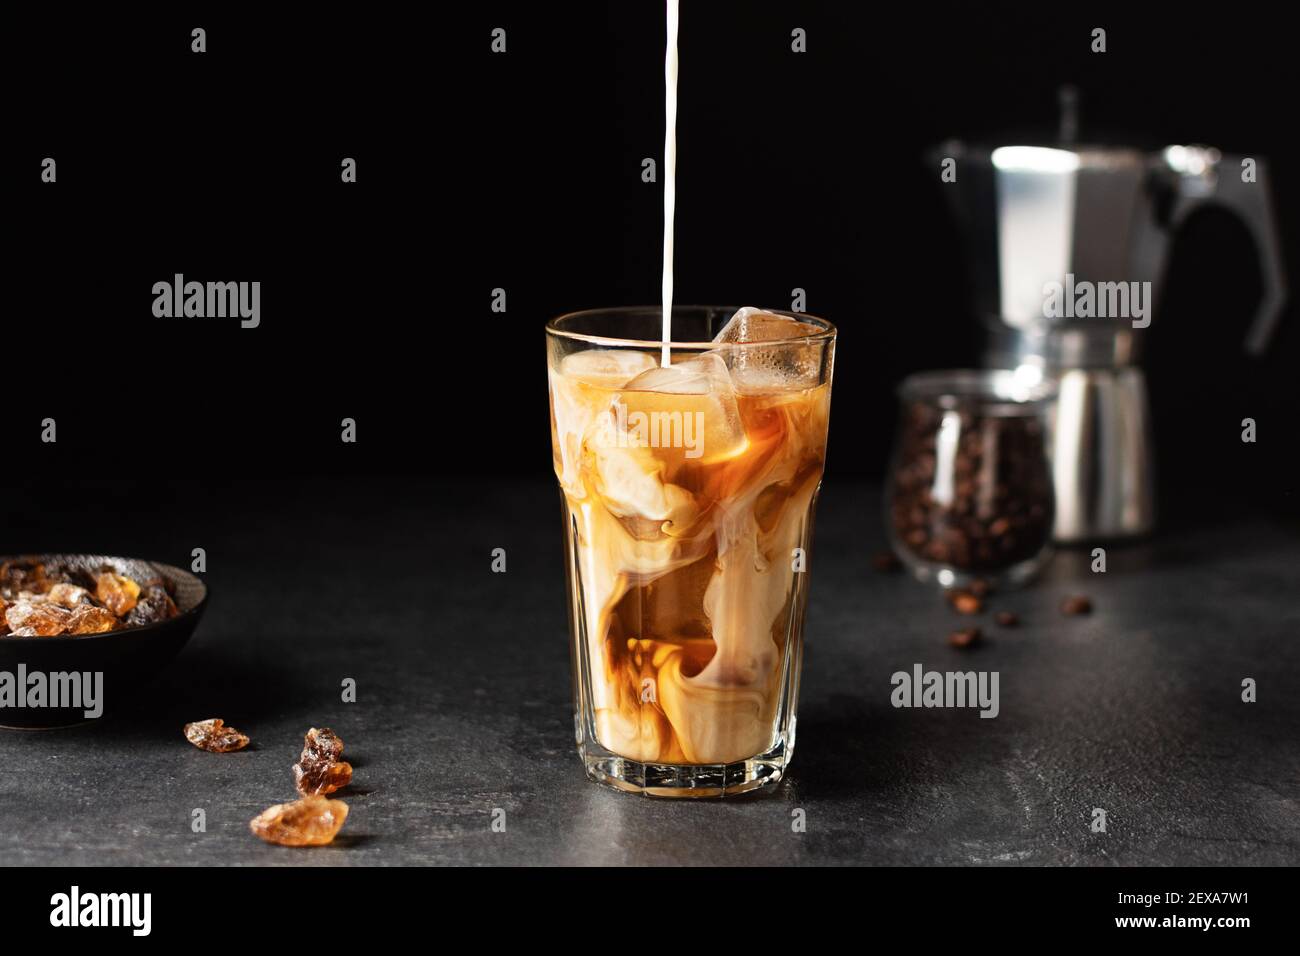 https://c8.alamy.com/compes/2exa7w1/verter-leche-en-un-vaso-con-cafe-helado-sobre-fondo-negro-refresco-frio-bebida-de-verano-2exa7w1.jpg